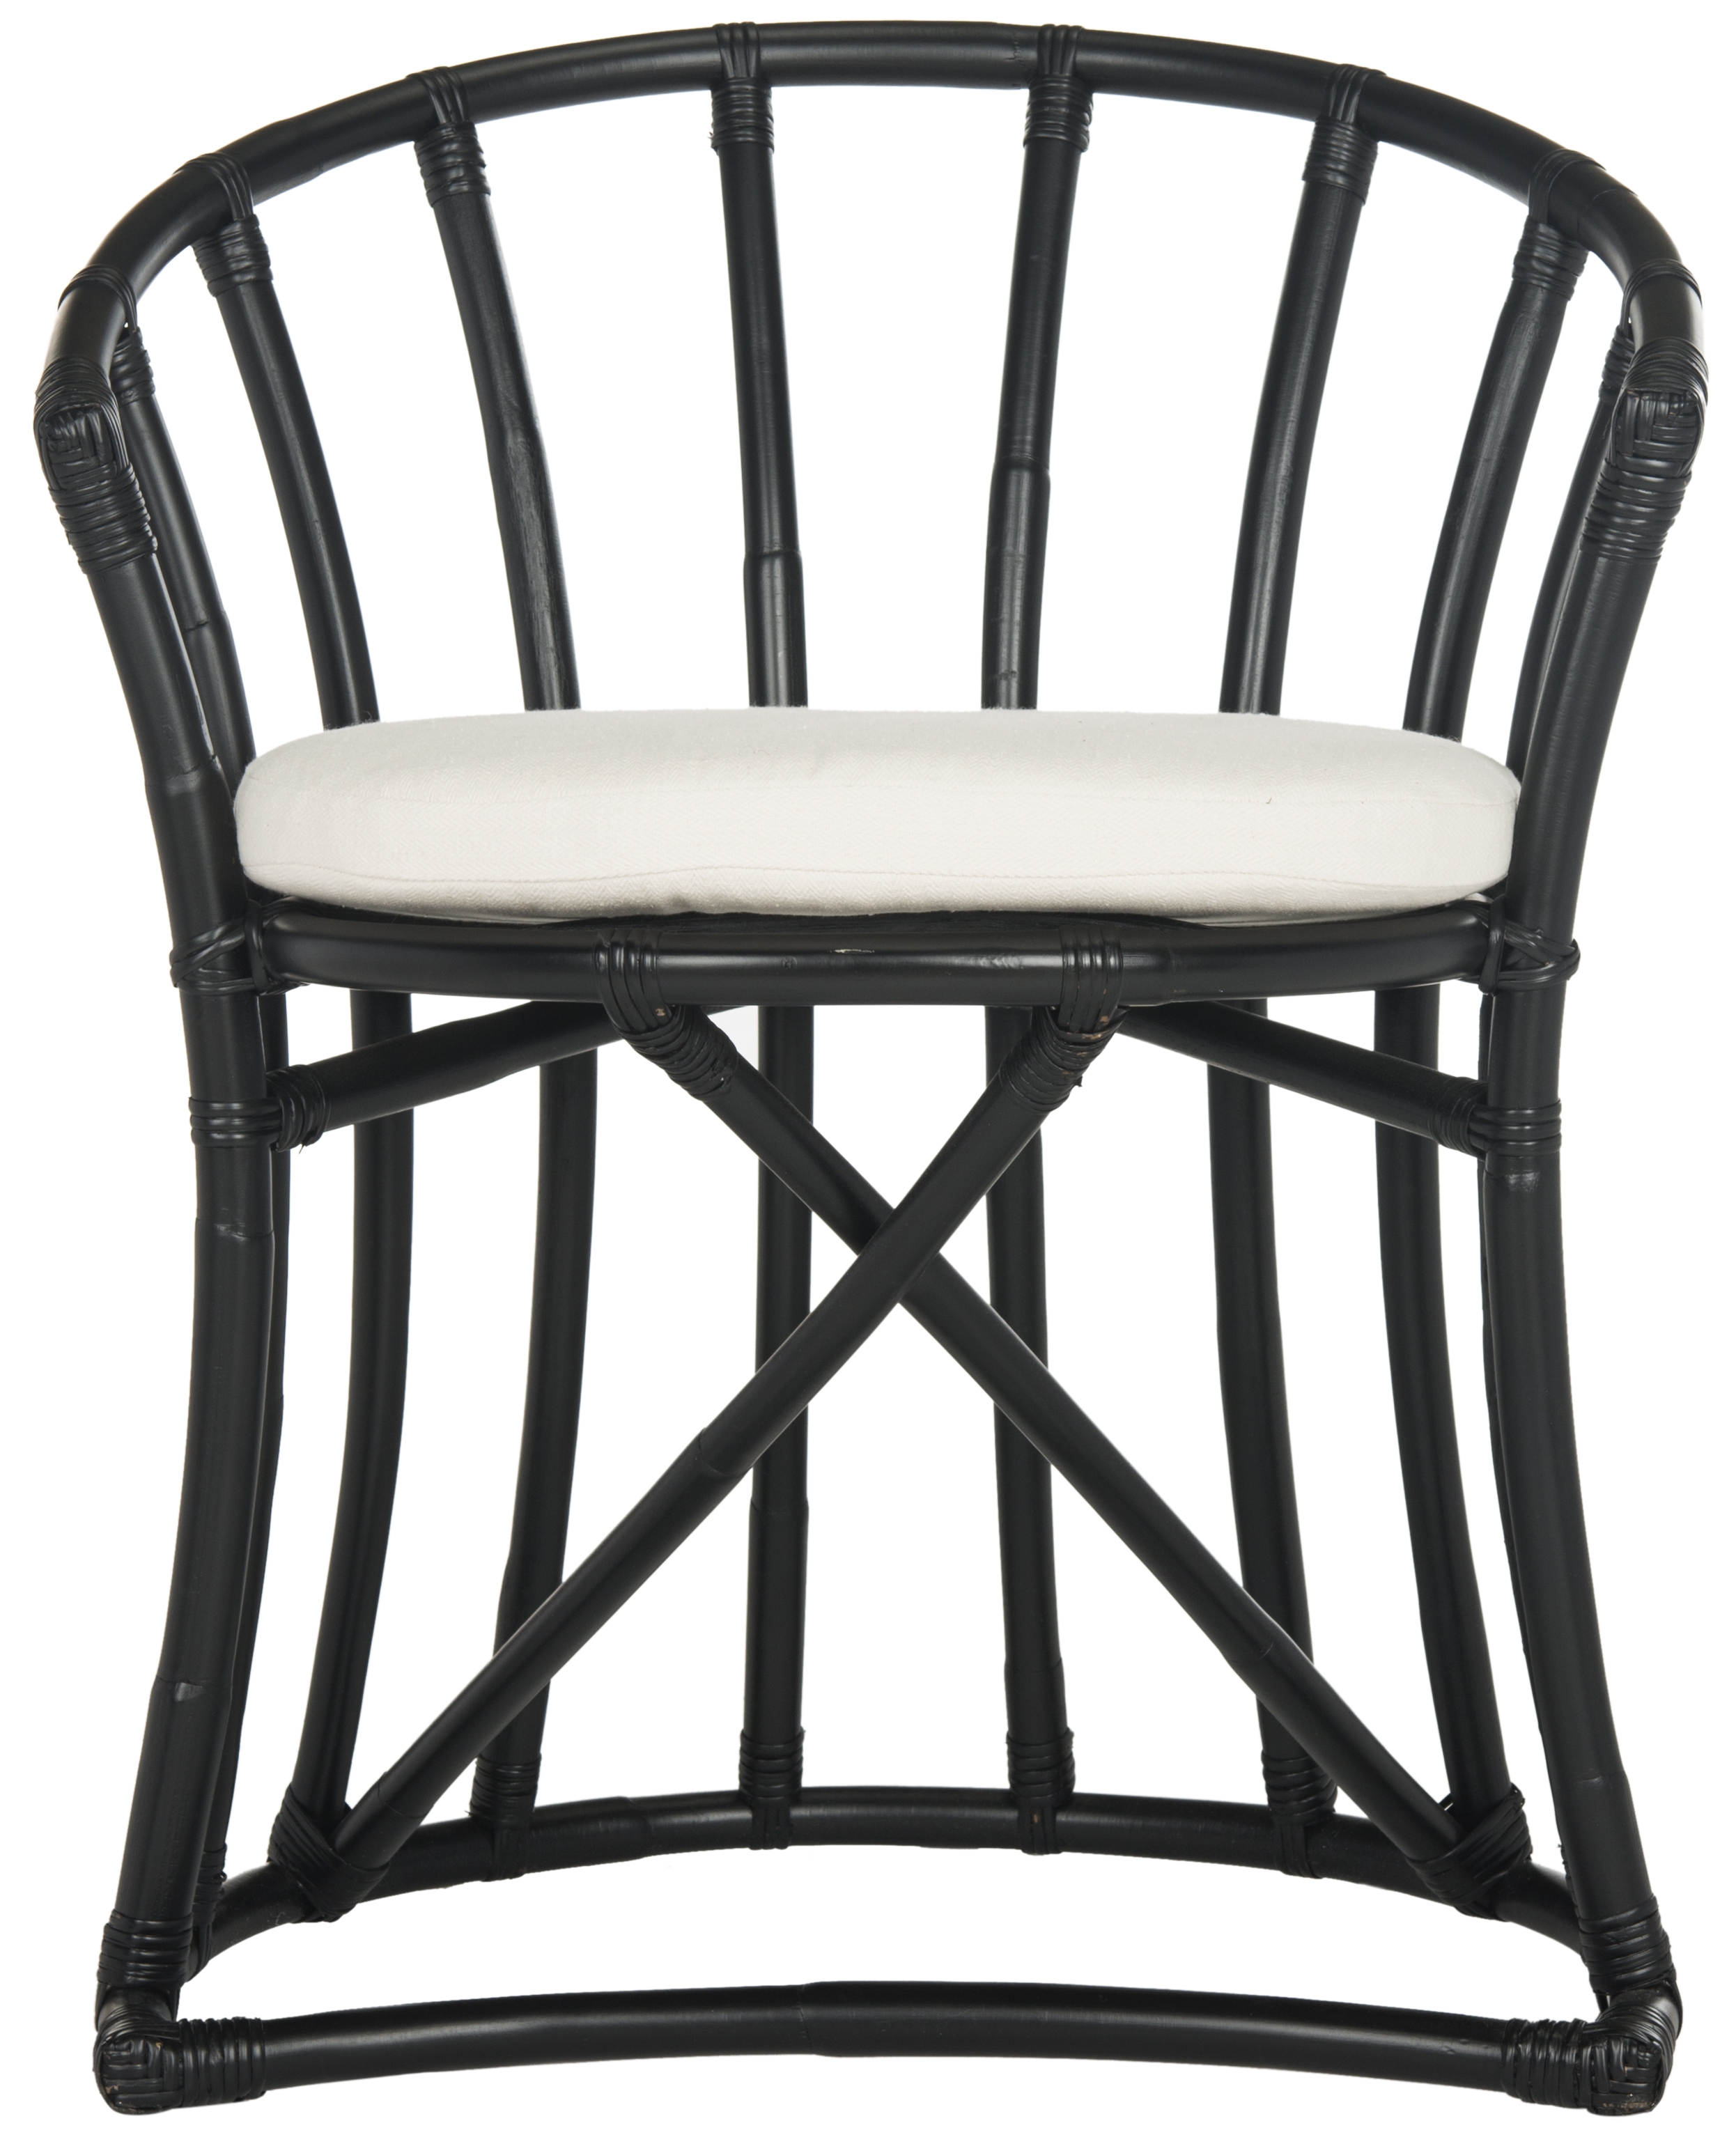 Bates Rattan Accent Chair - Black/White - Safavieh - Image 0